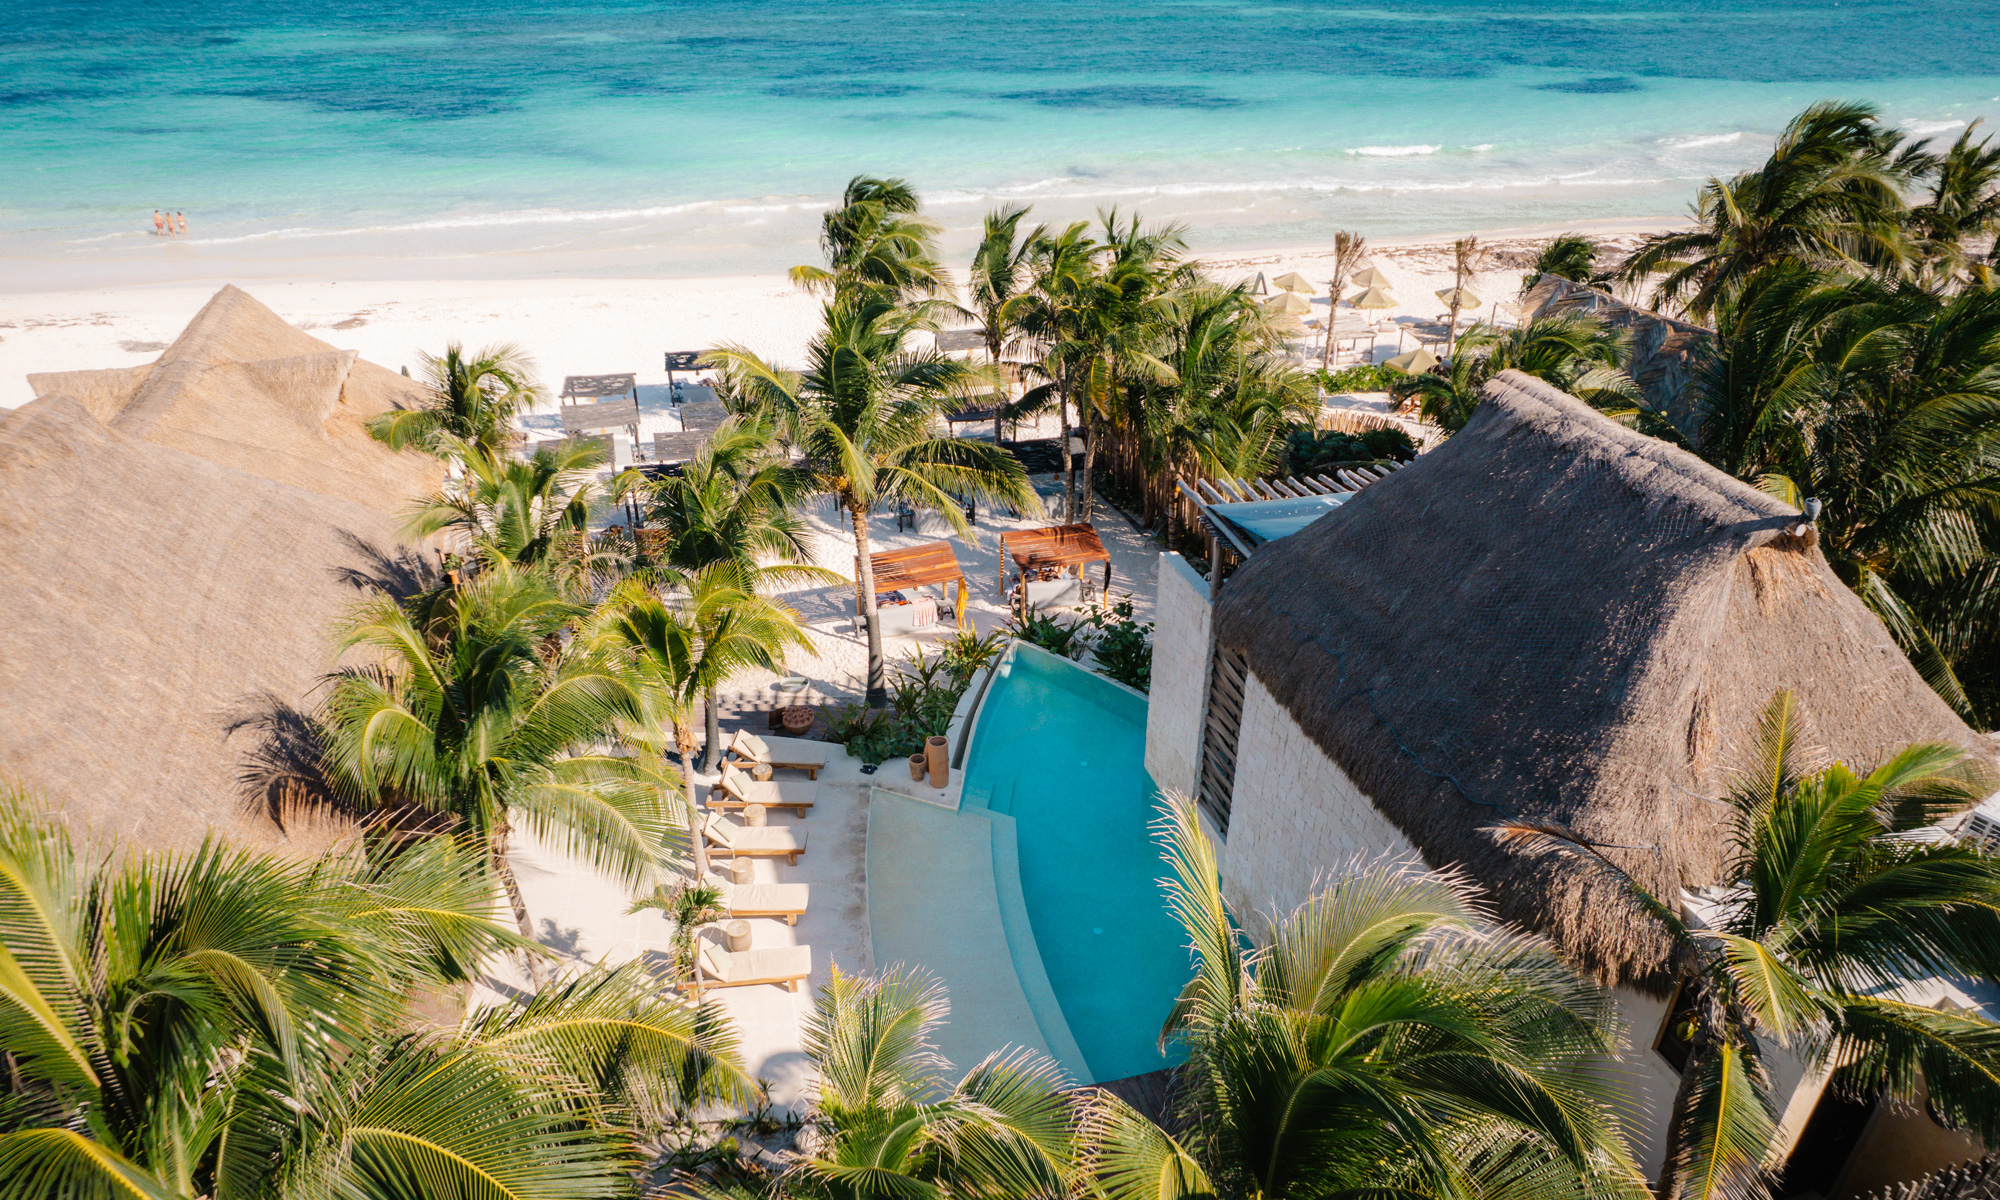 Maxanab hotel on tulum beach with ocean and coconut palms